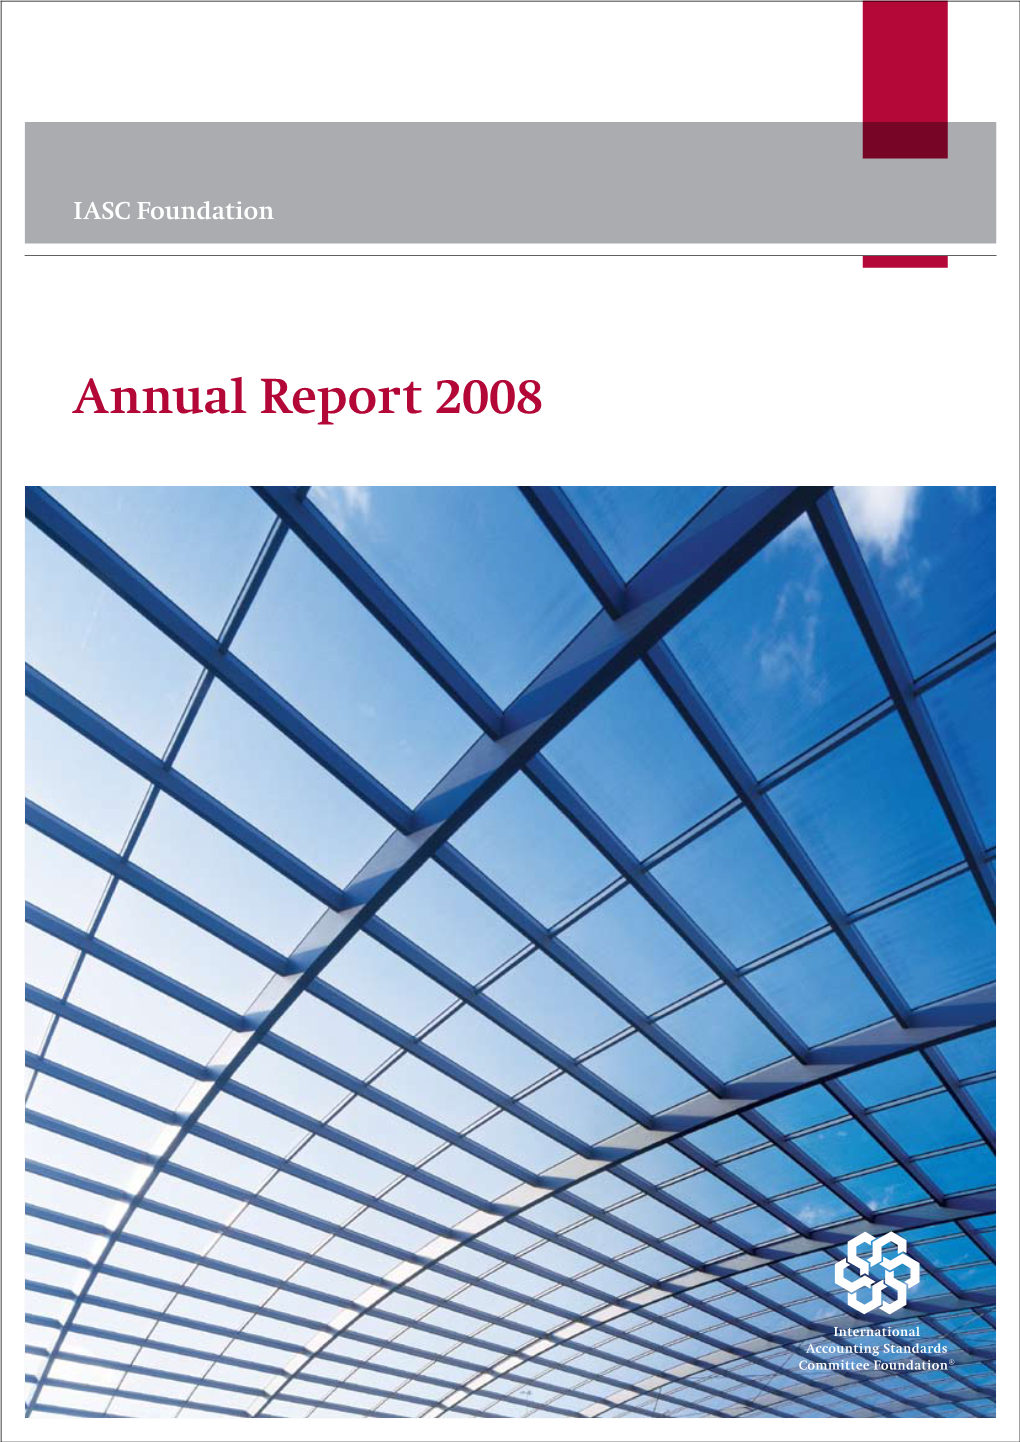 Annual Report 2008 IASC Foundation